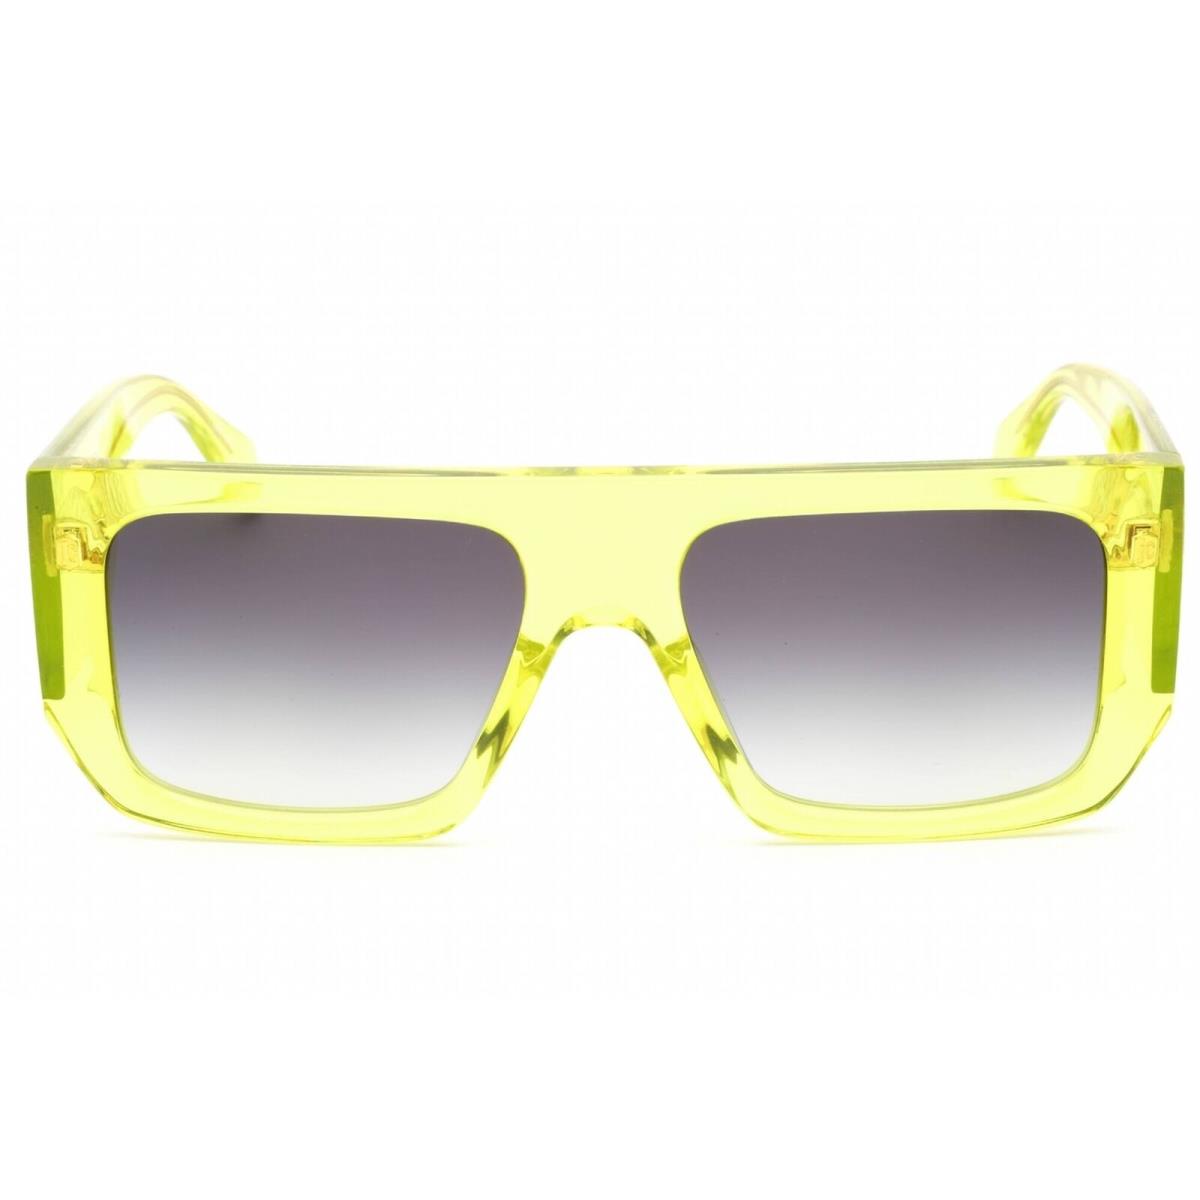 Just Cavalli Women`s Sunglasses Shiny Transparent Green Square Frame SJC022 0998